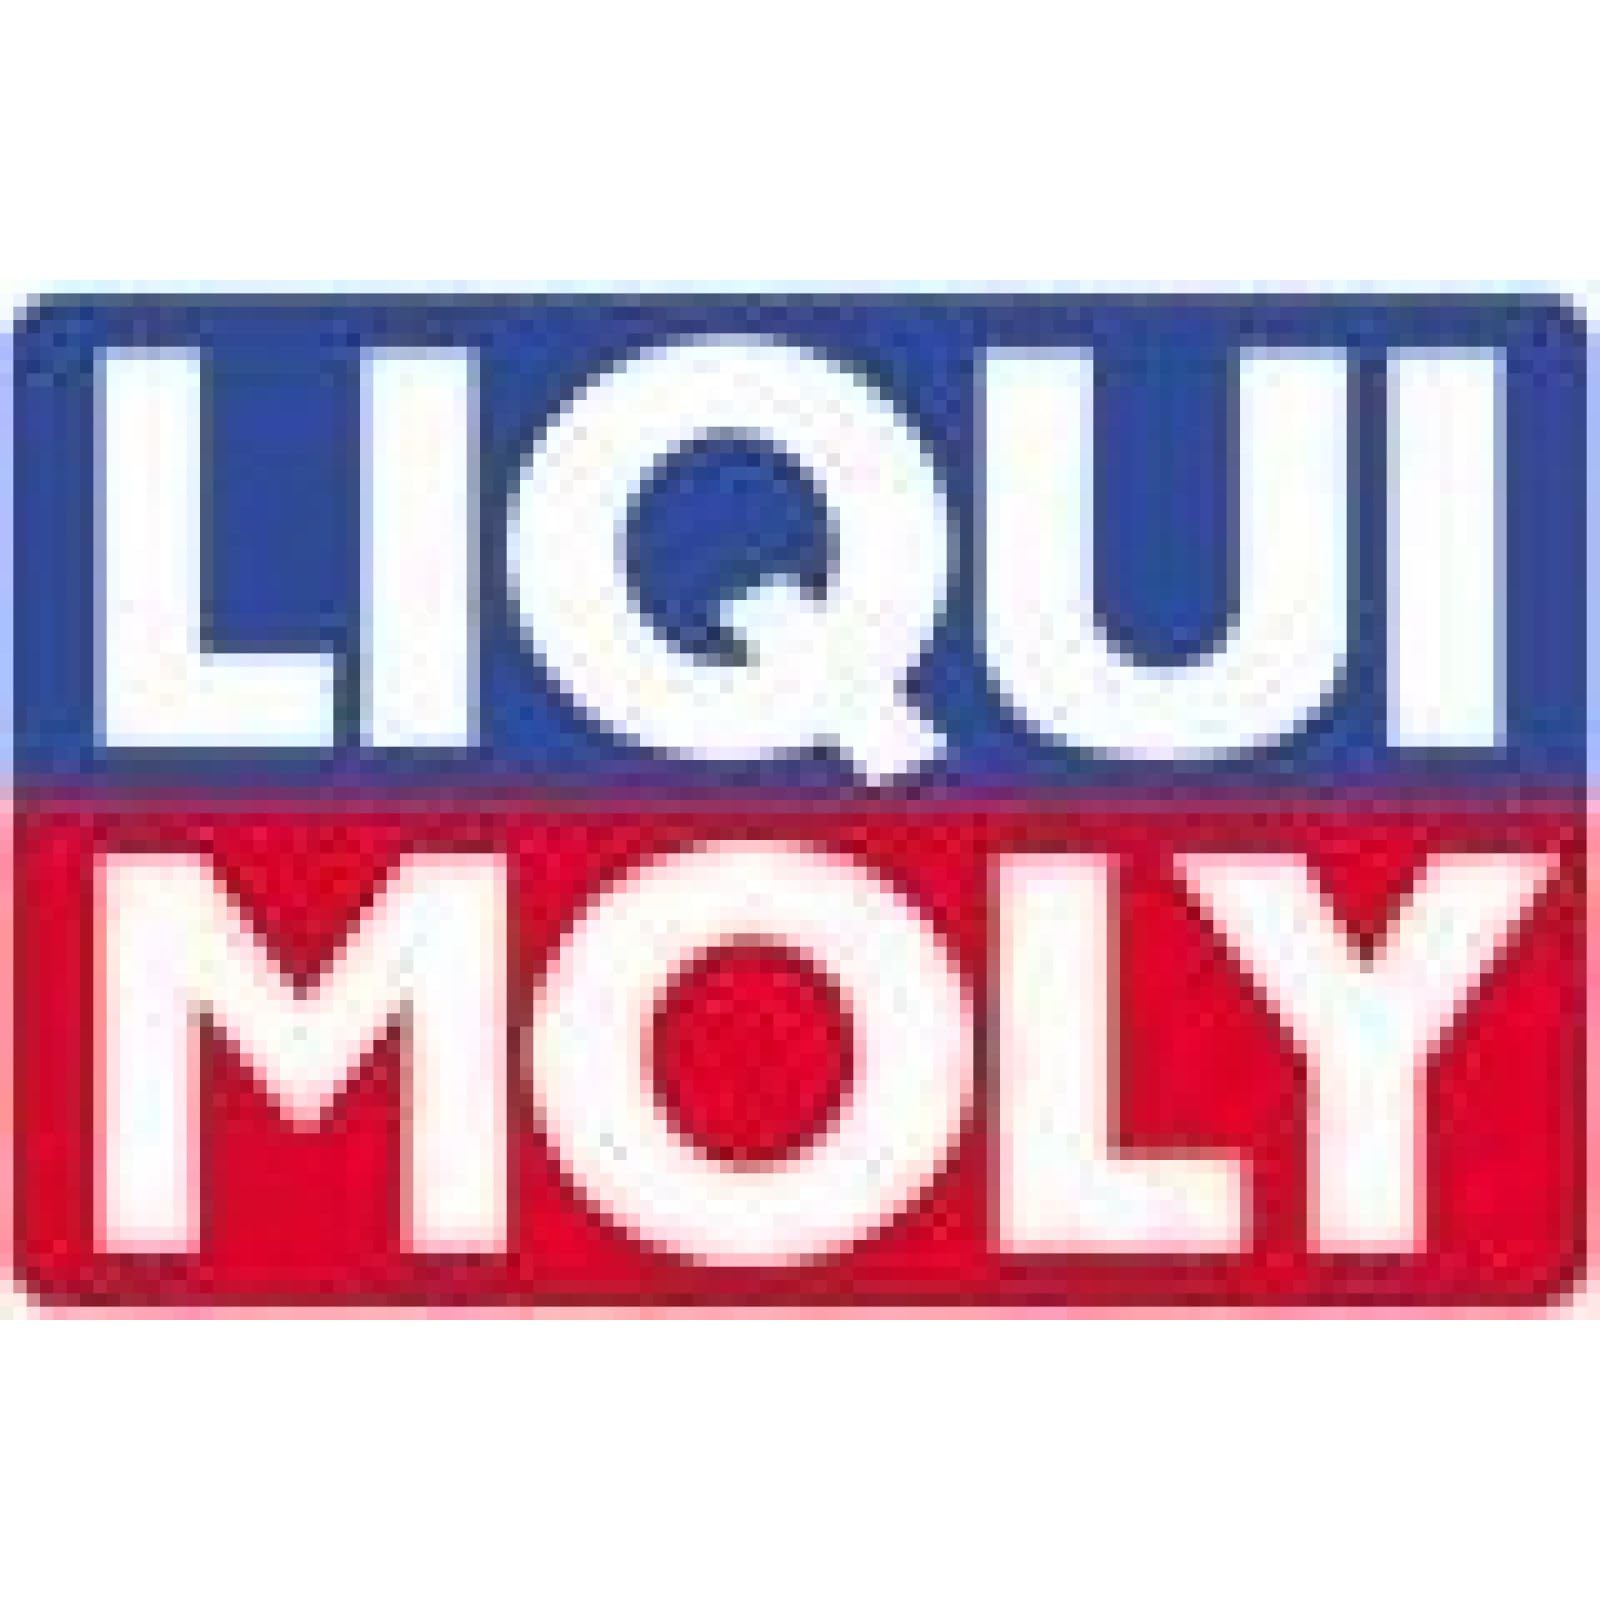 LIQUI MOLY Klingen für Falzschaber 20mm (10 Stück) | 10 Stk | Klebstoff | Art.-Nr.: 6258 von Liqui Moly